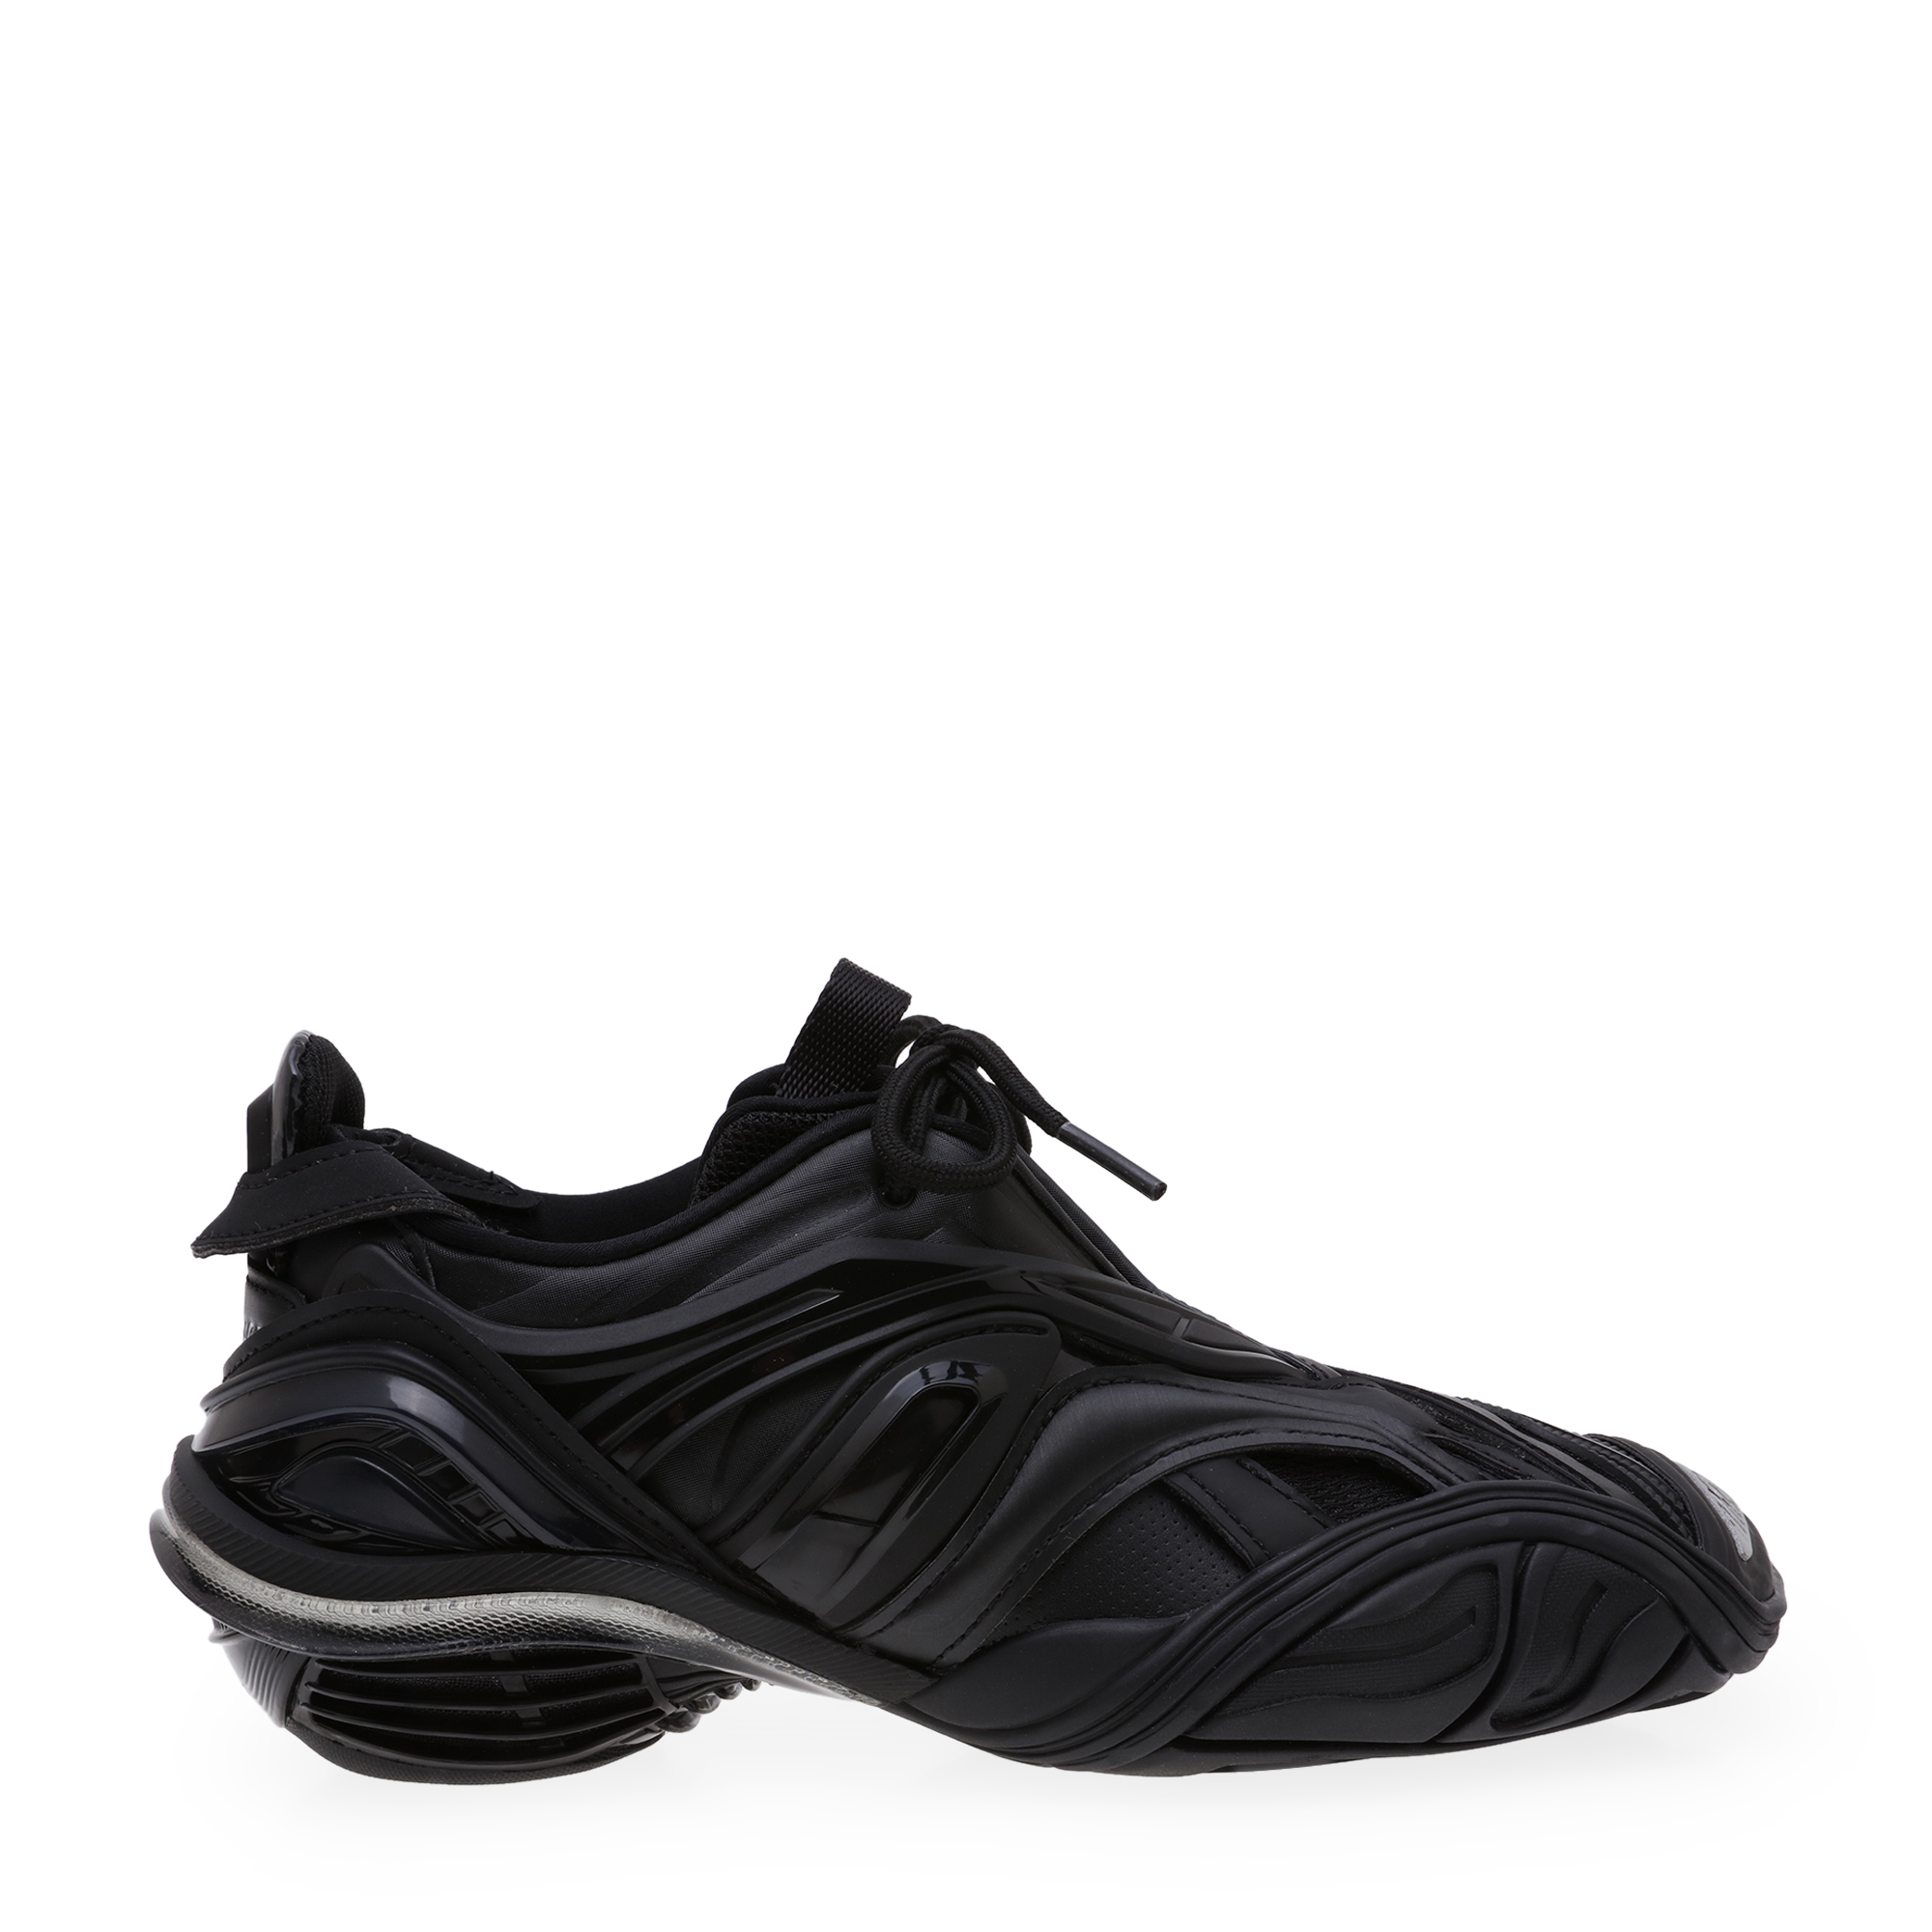 Balenciaga Tyrex sneakers for Men - Black in KSA | Level Shoes